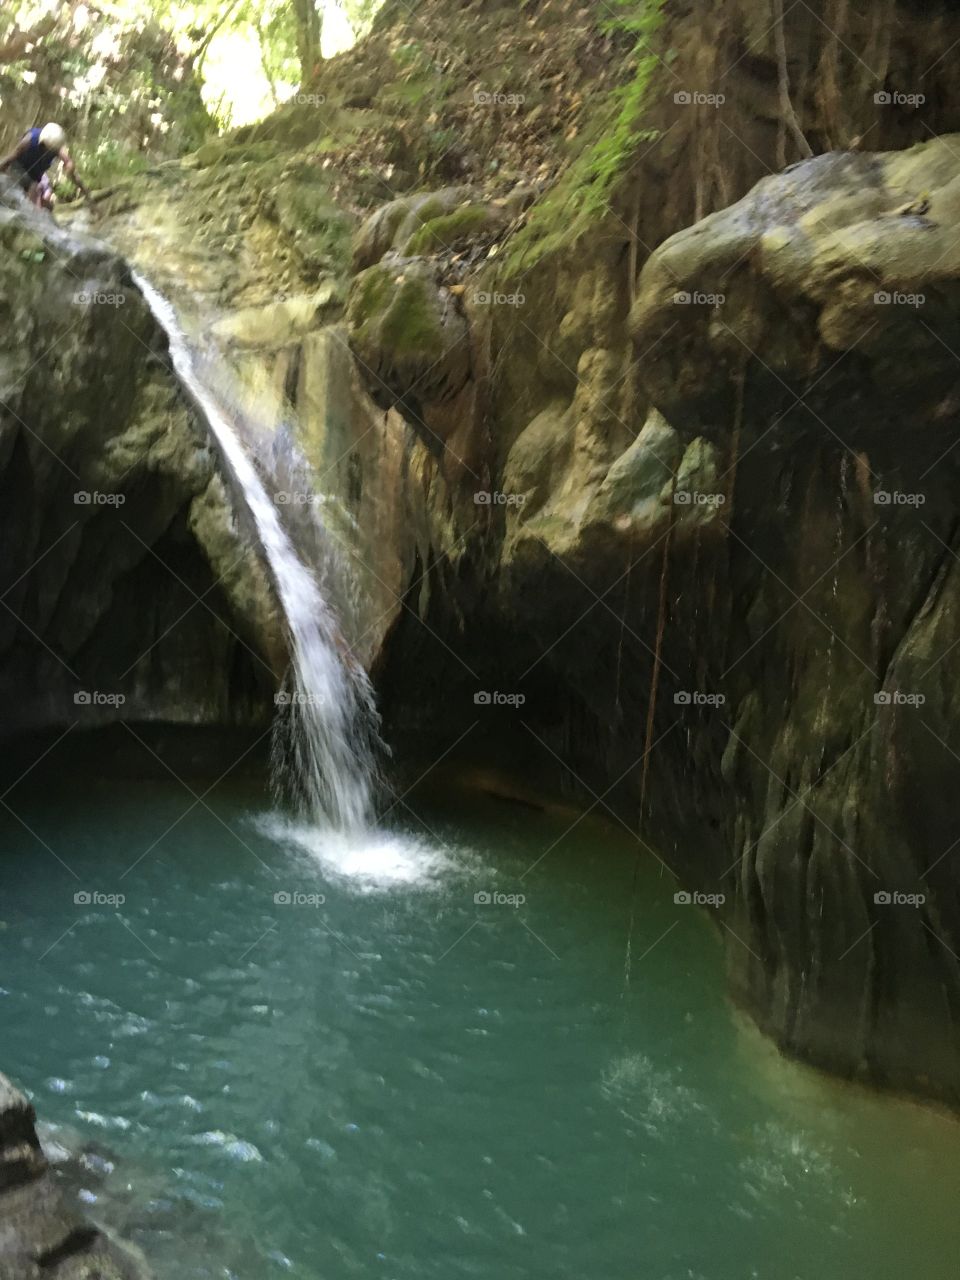 Natural water slide
